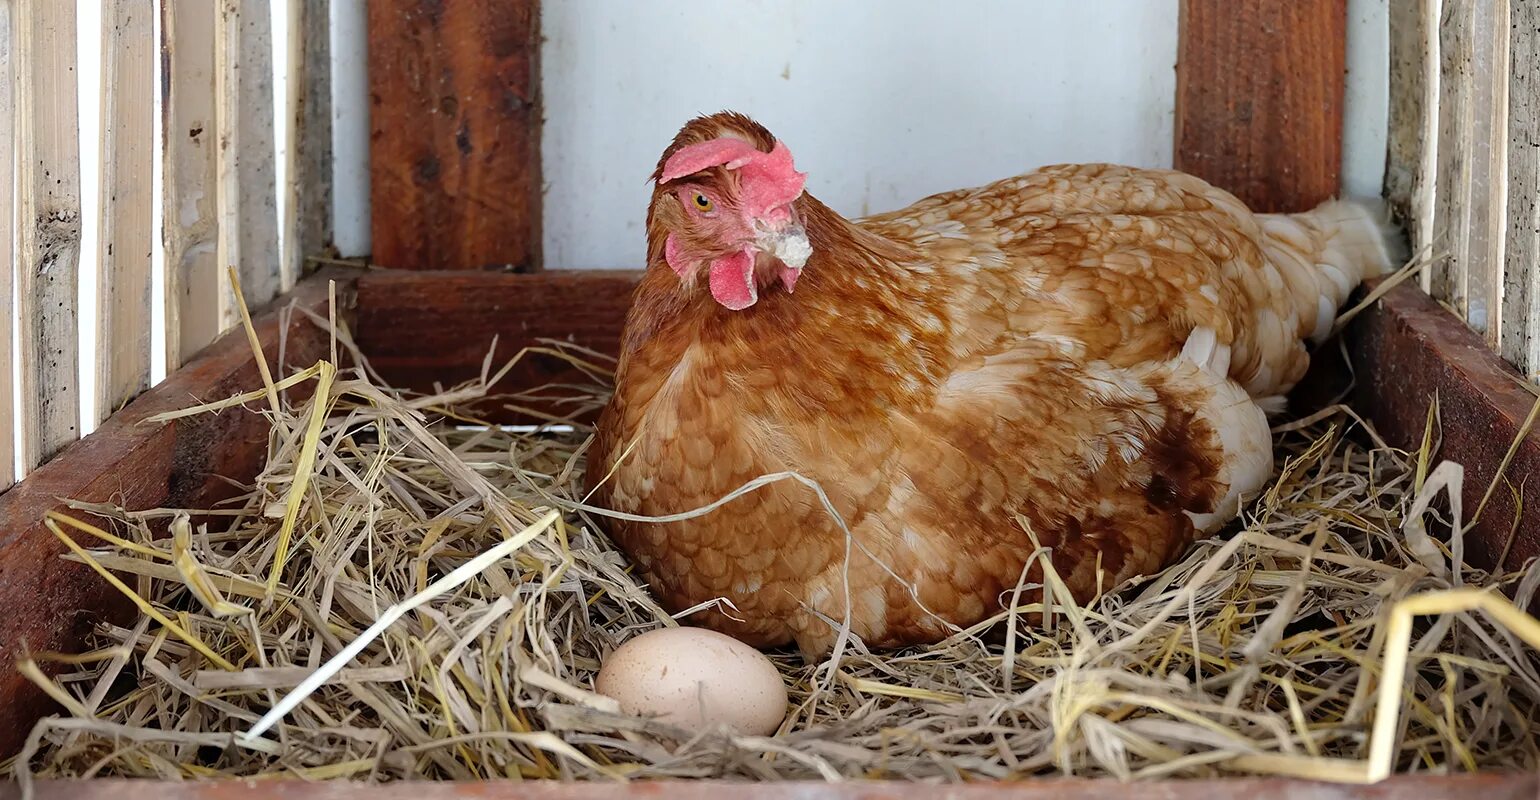 Курочка несется. Куры несут яйца. Курица высиживает яйца. Куры не несутся.